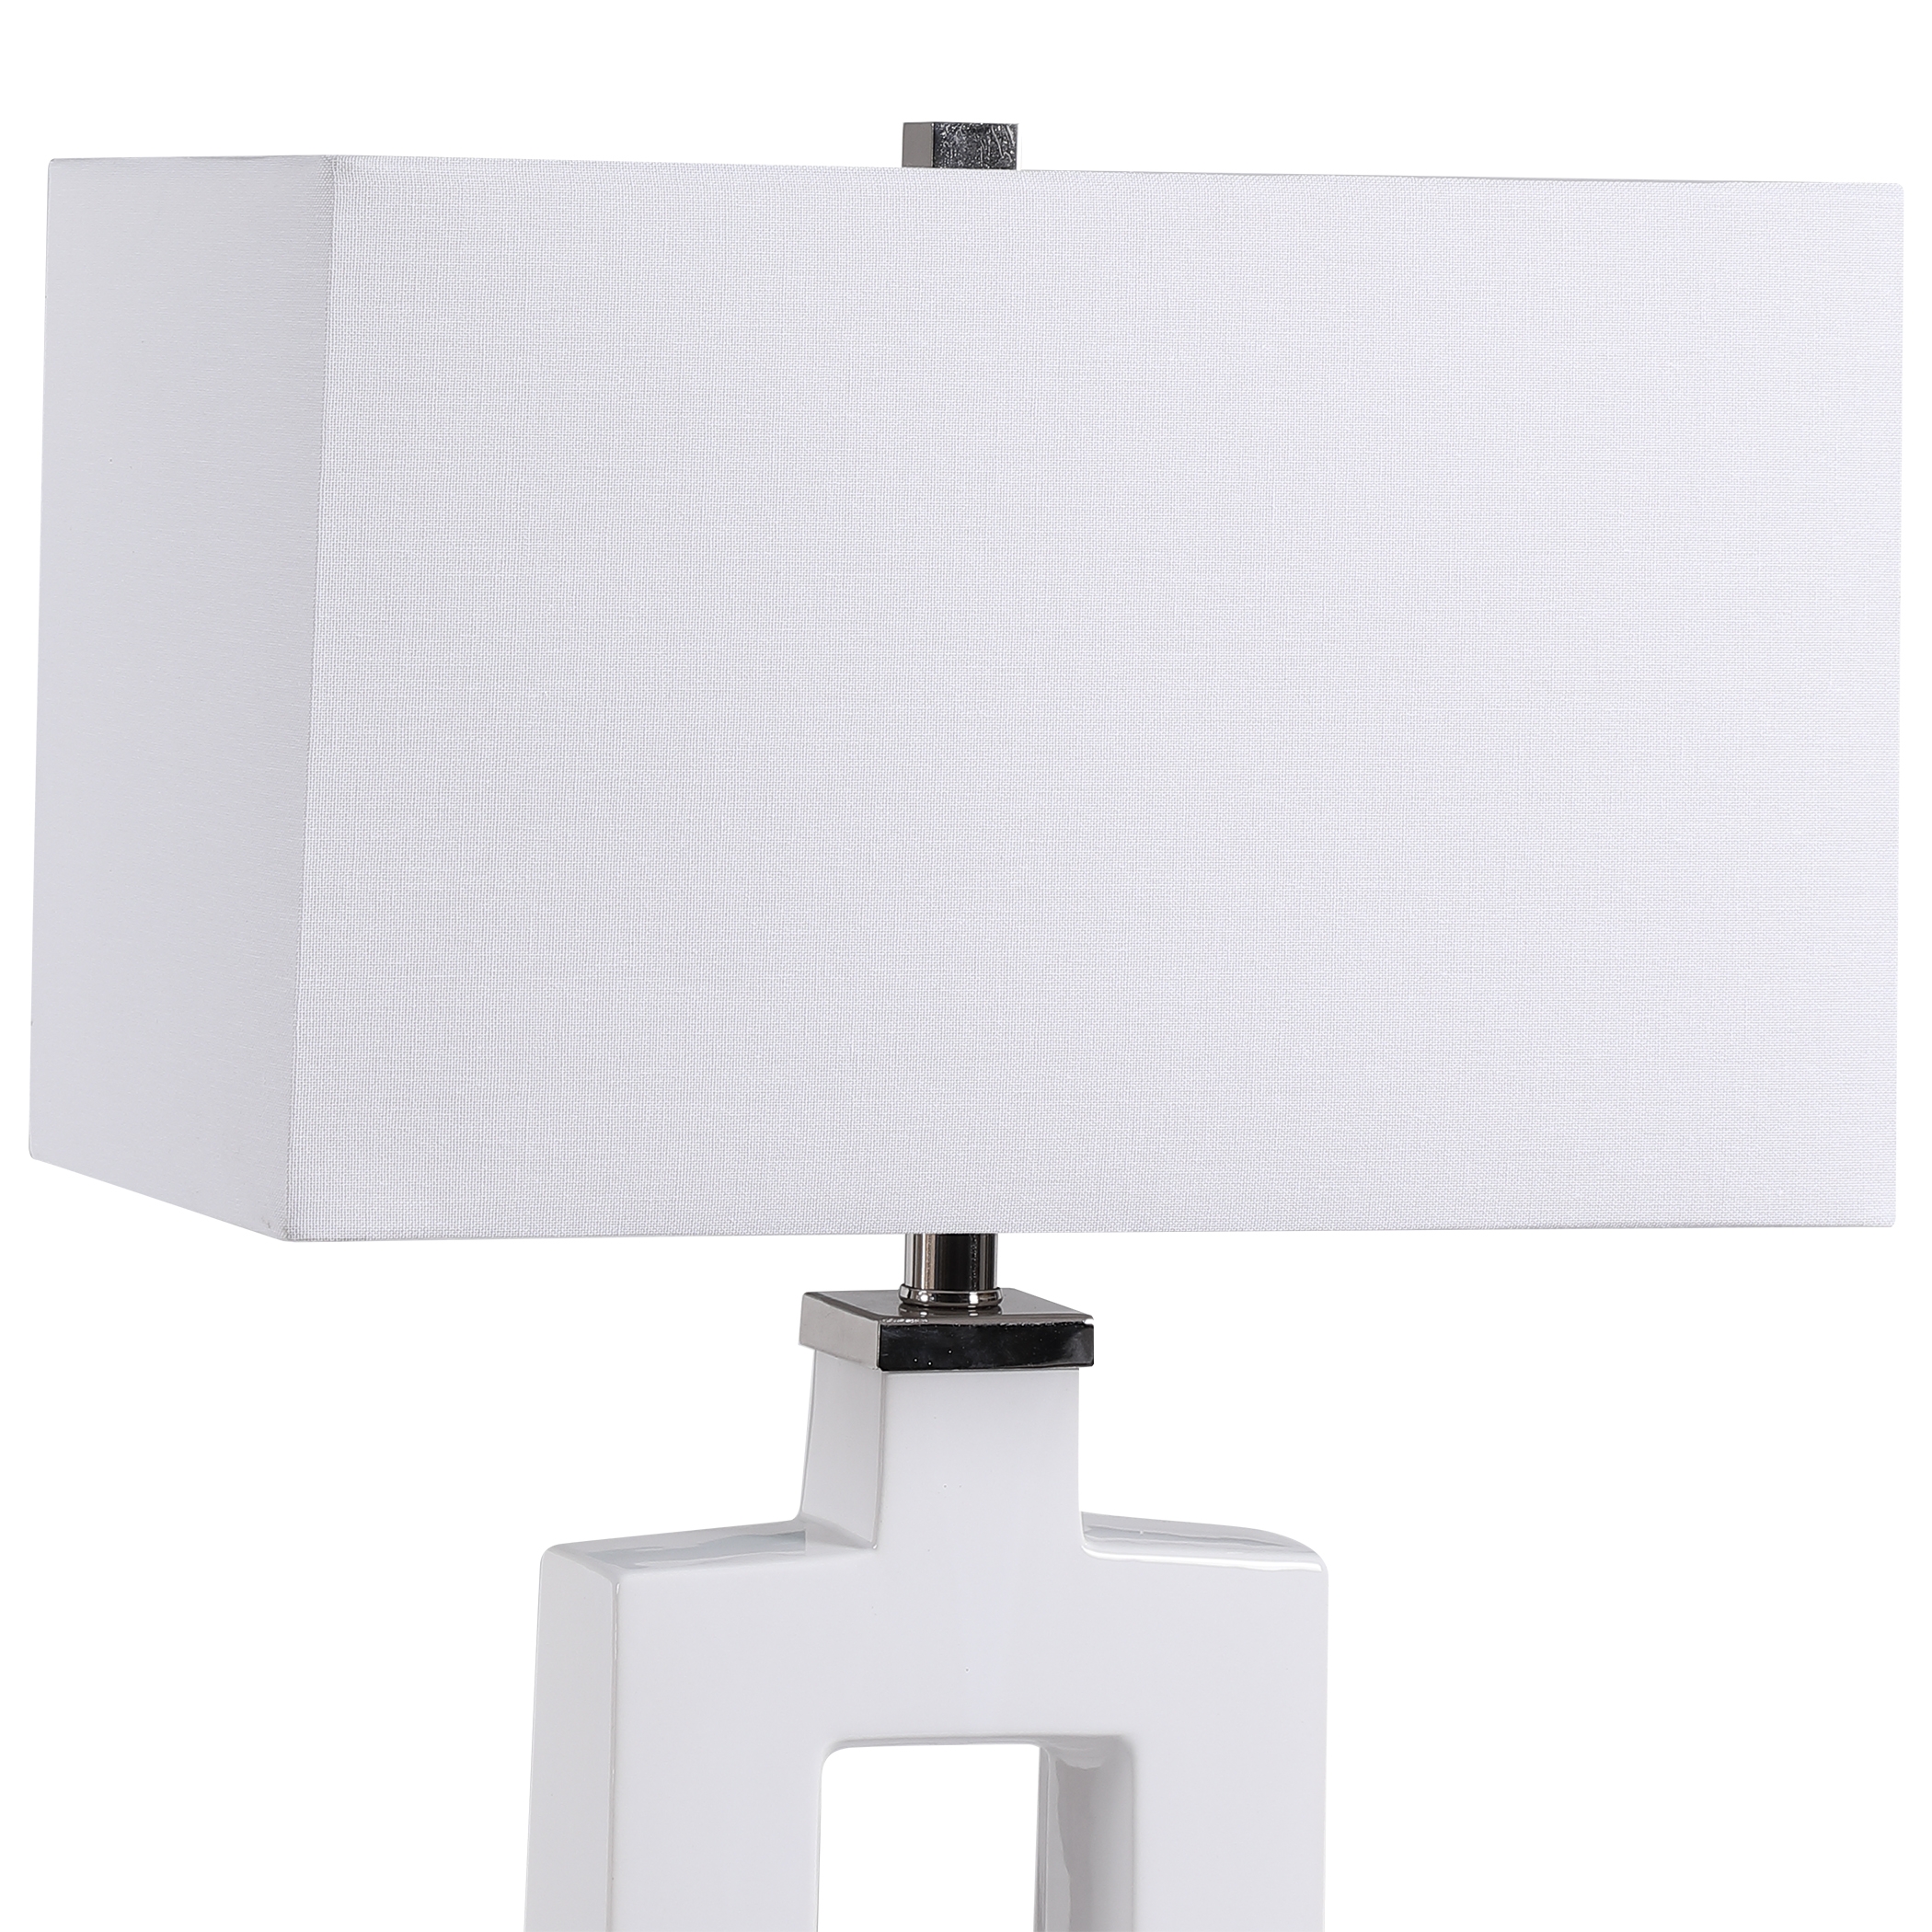 Entry Modern White Table Lamp - Image 3